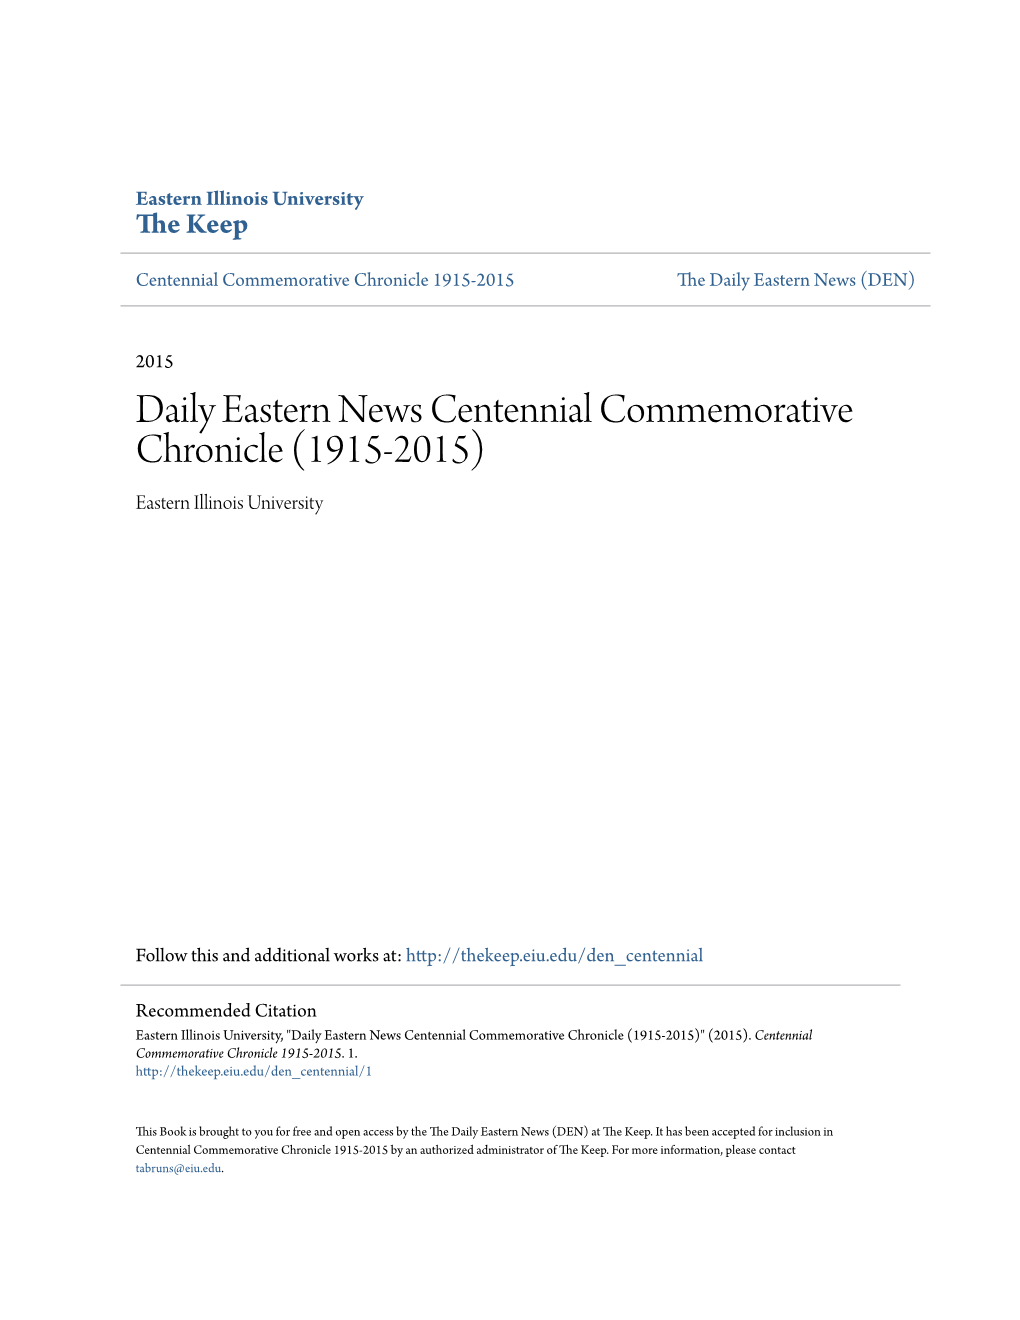 Daily Eastern News Centennial Commemorative Chronicle (1915-2015) Eastern Illinois University